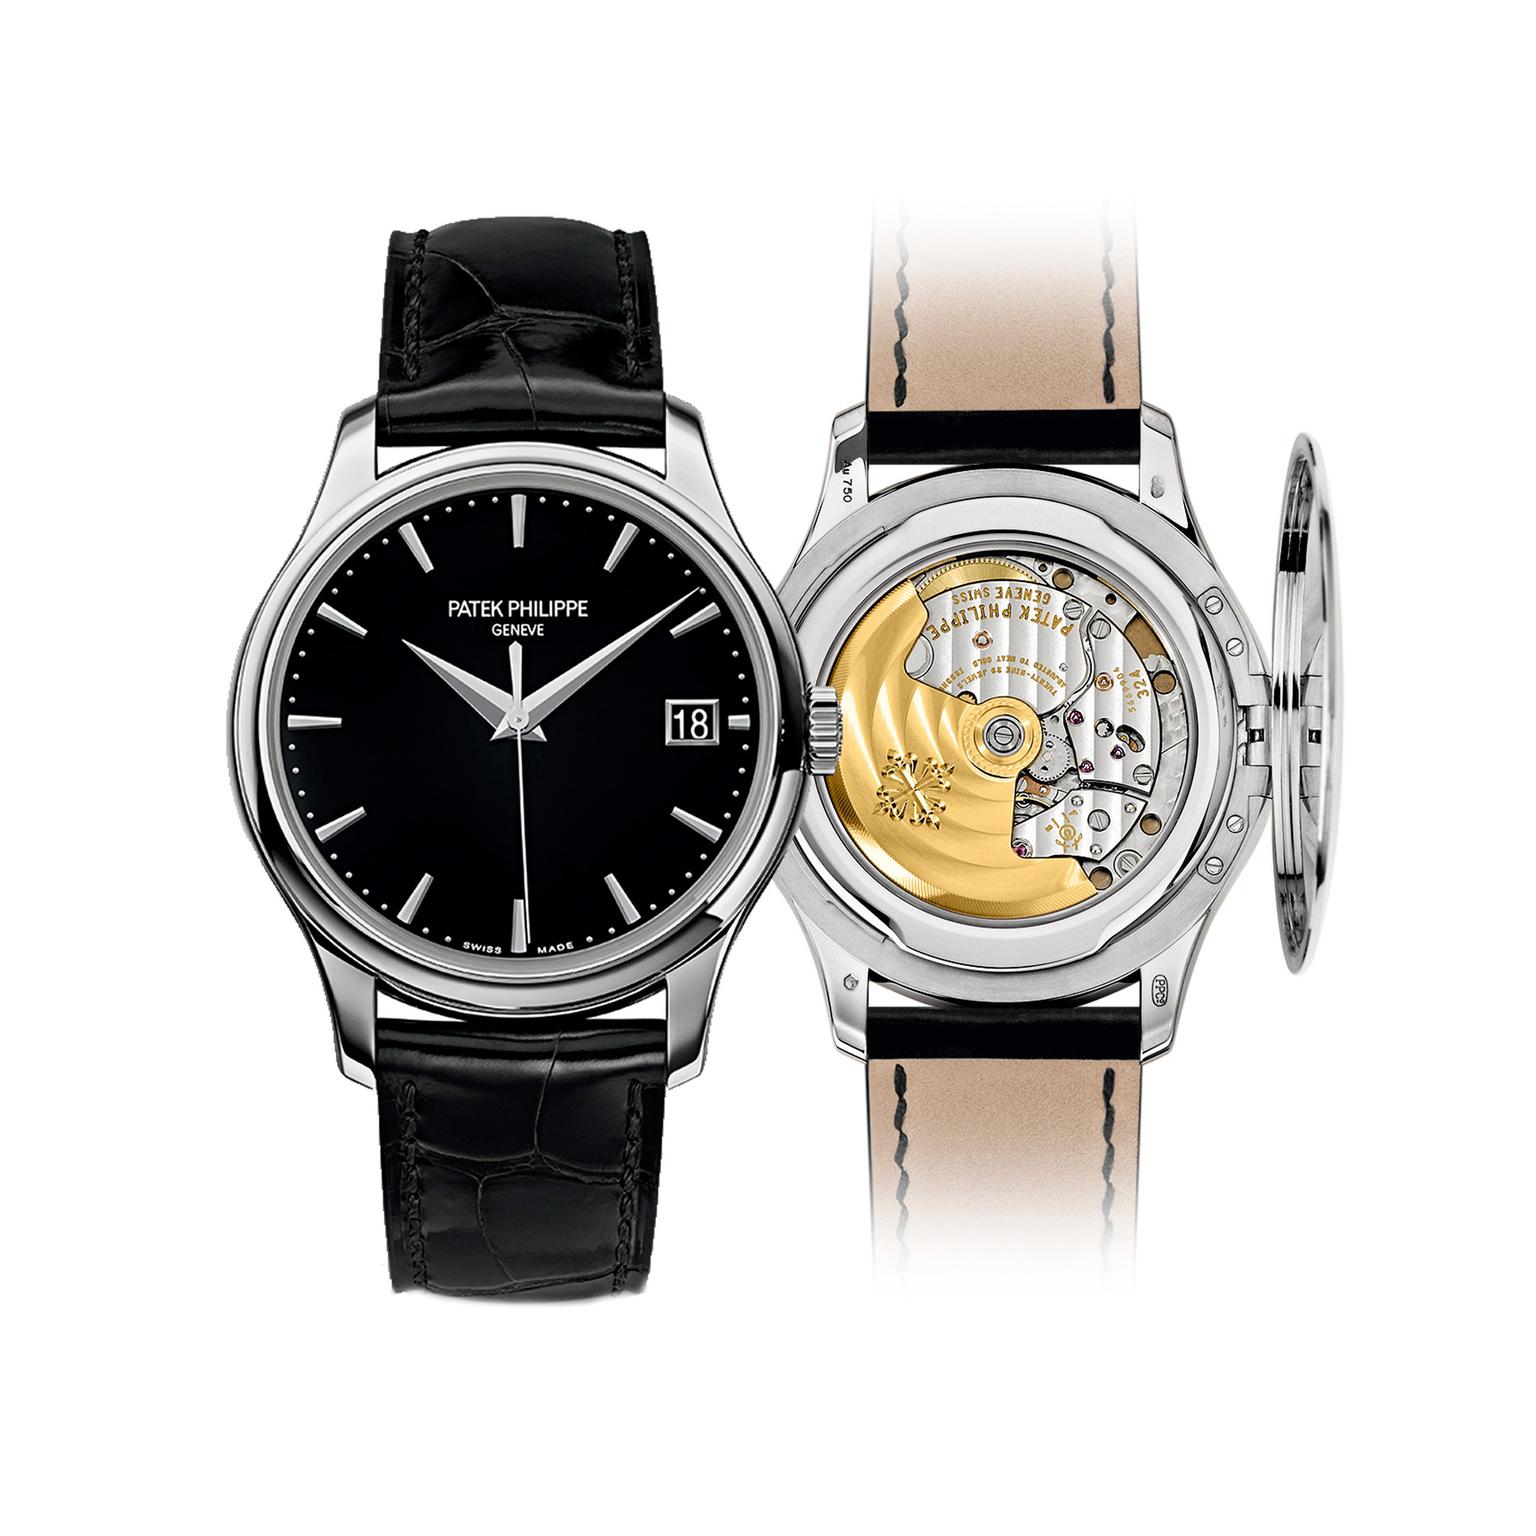 Patek Philippe Calatrava Ref. 5227G  watch with hinged caseback